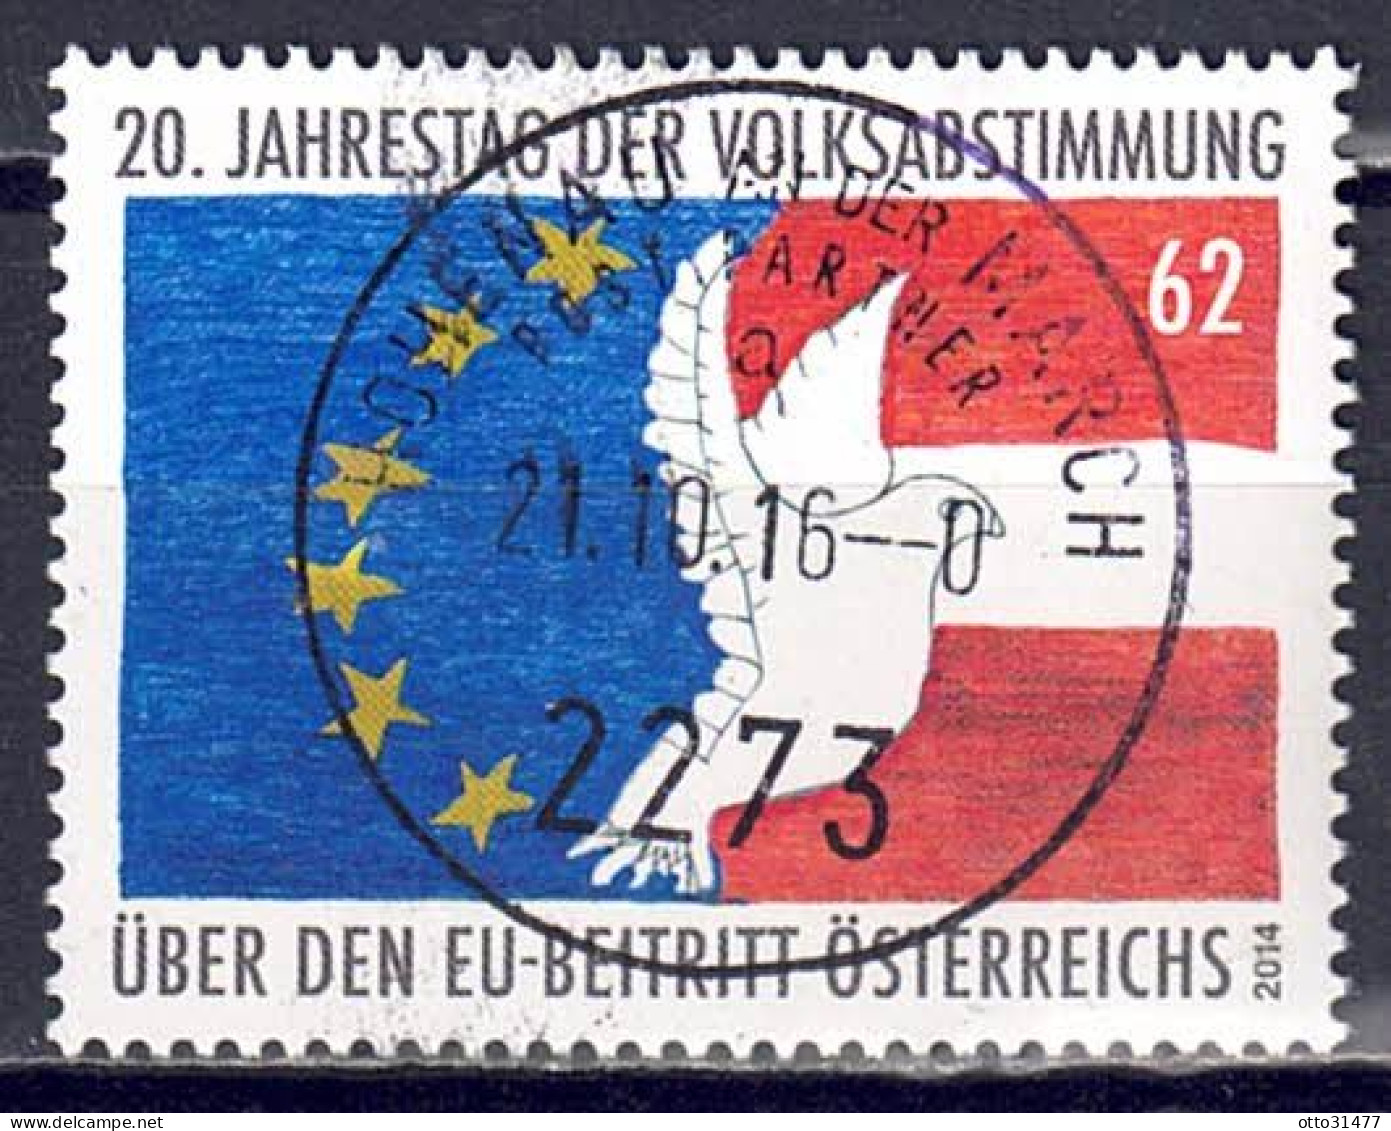 Österreich 2014 - EU-Beitritt, MiNr. 3145, Gestempelt / Used - Gebruikt